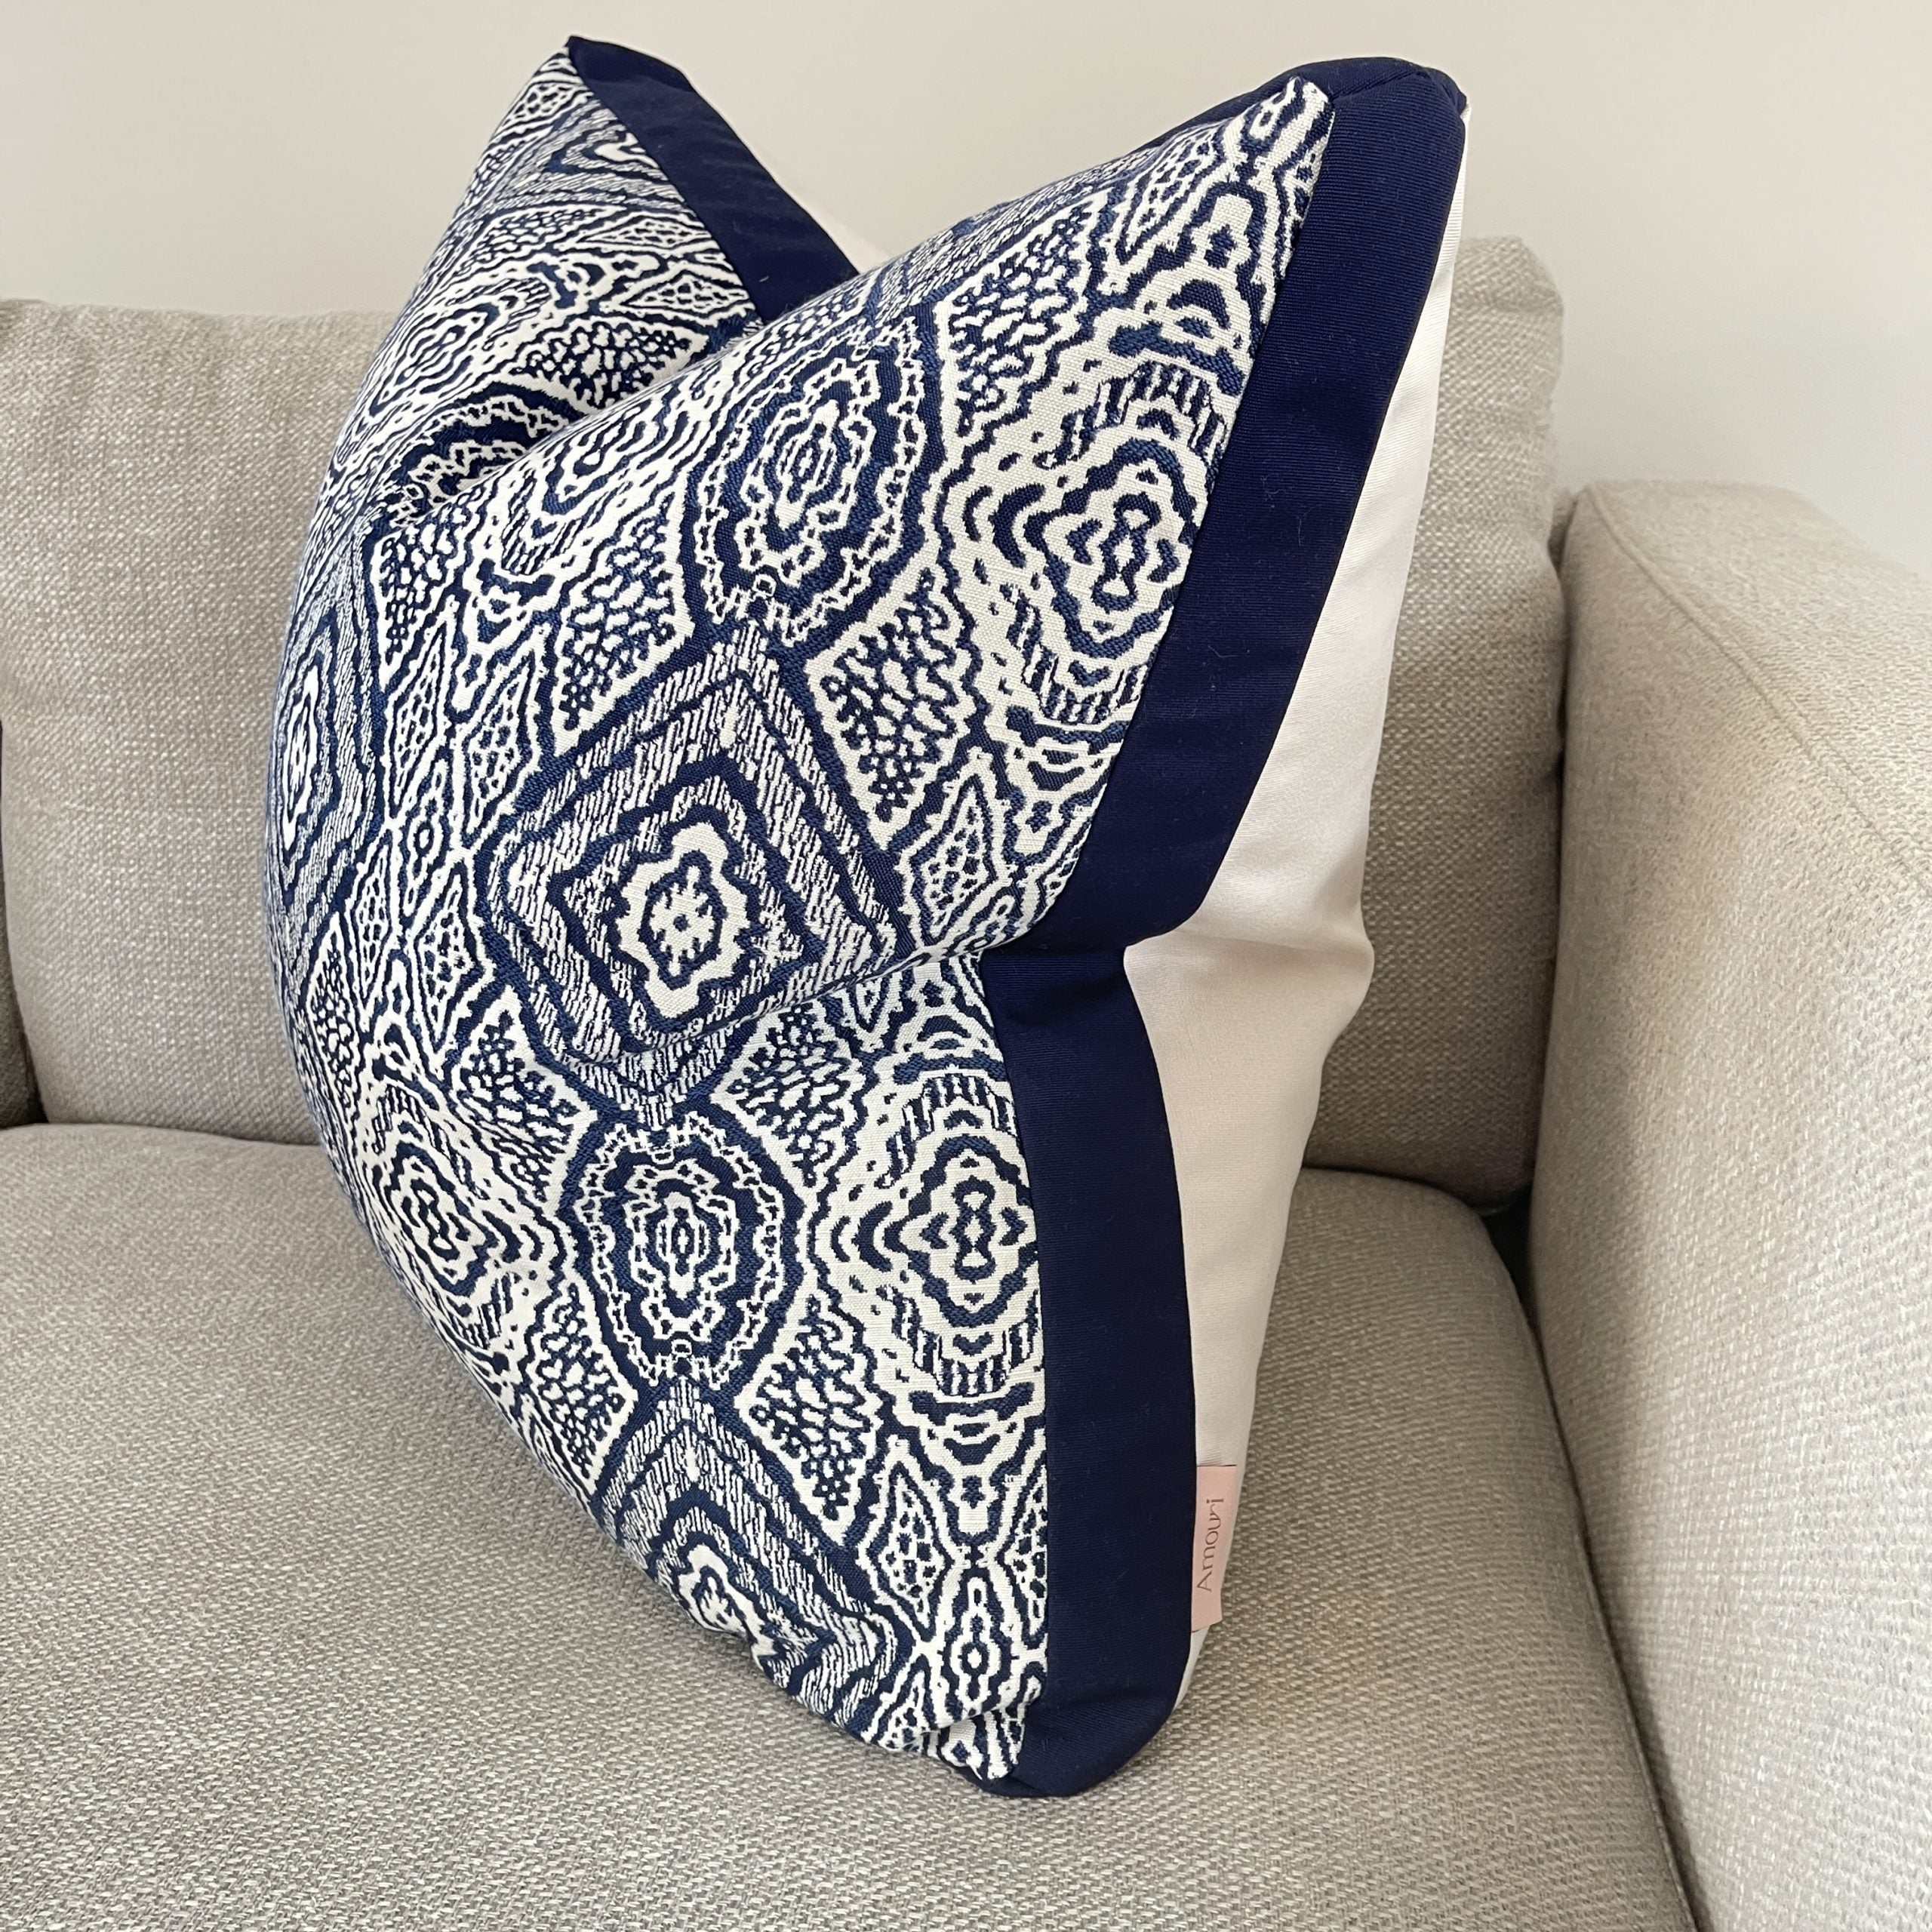 creative cushions uk